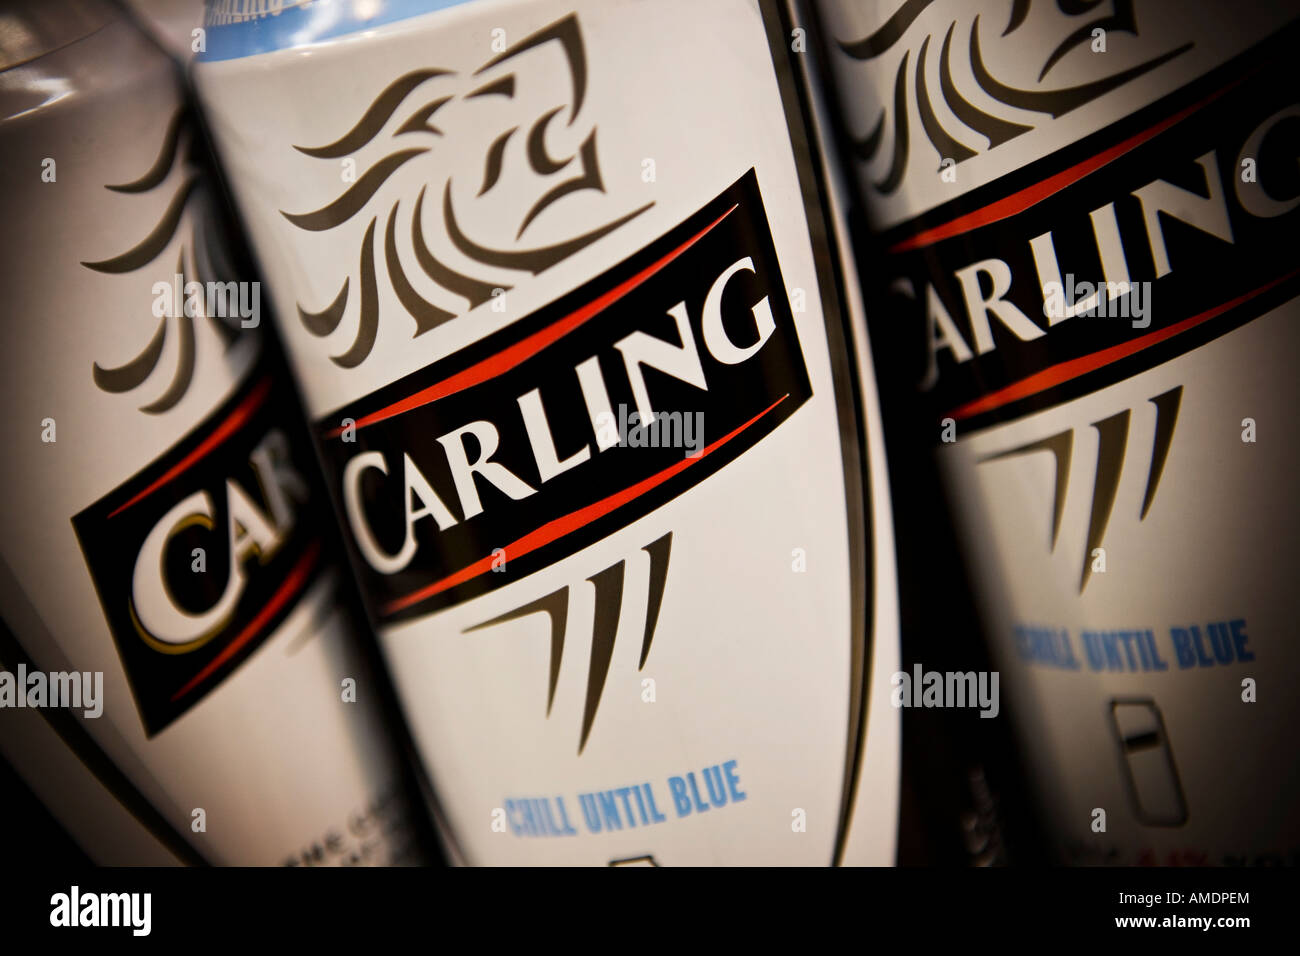 Latas de cerveza CARLING CARLING es una marca de Molson Coors Brewing Company Foto de stock